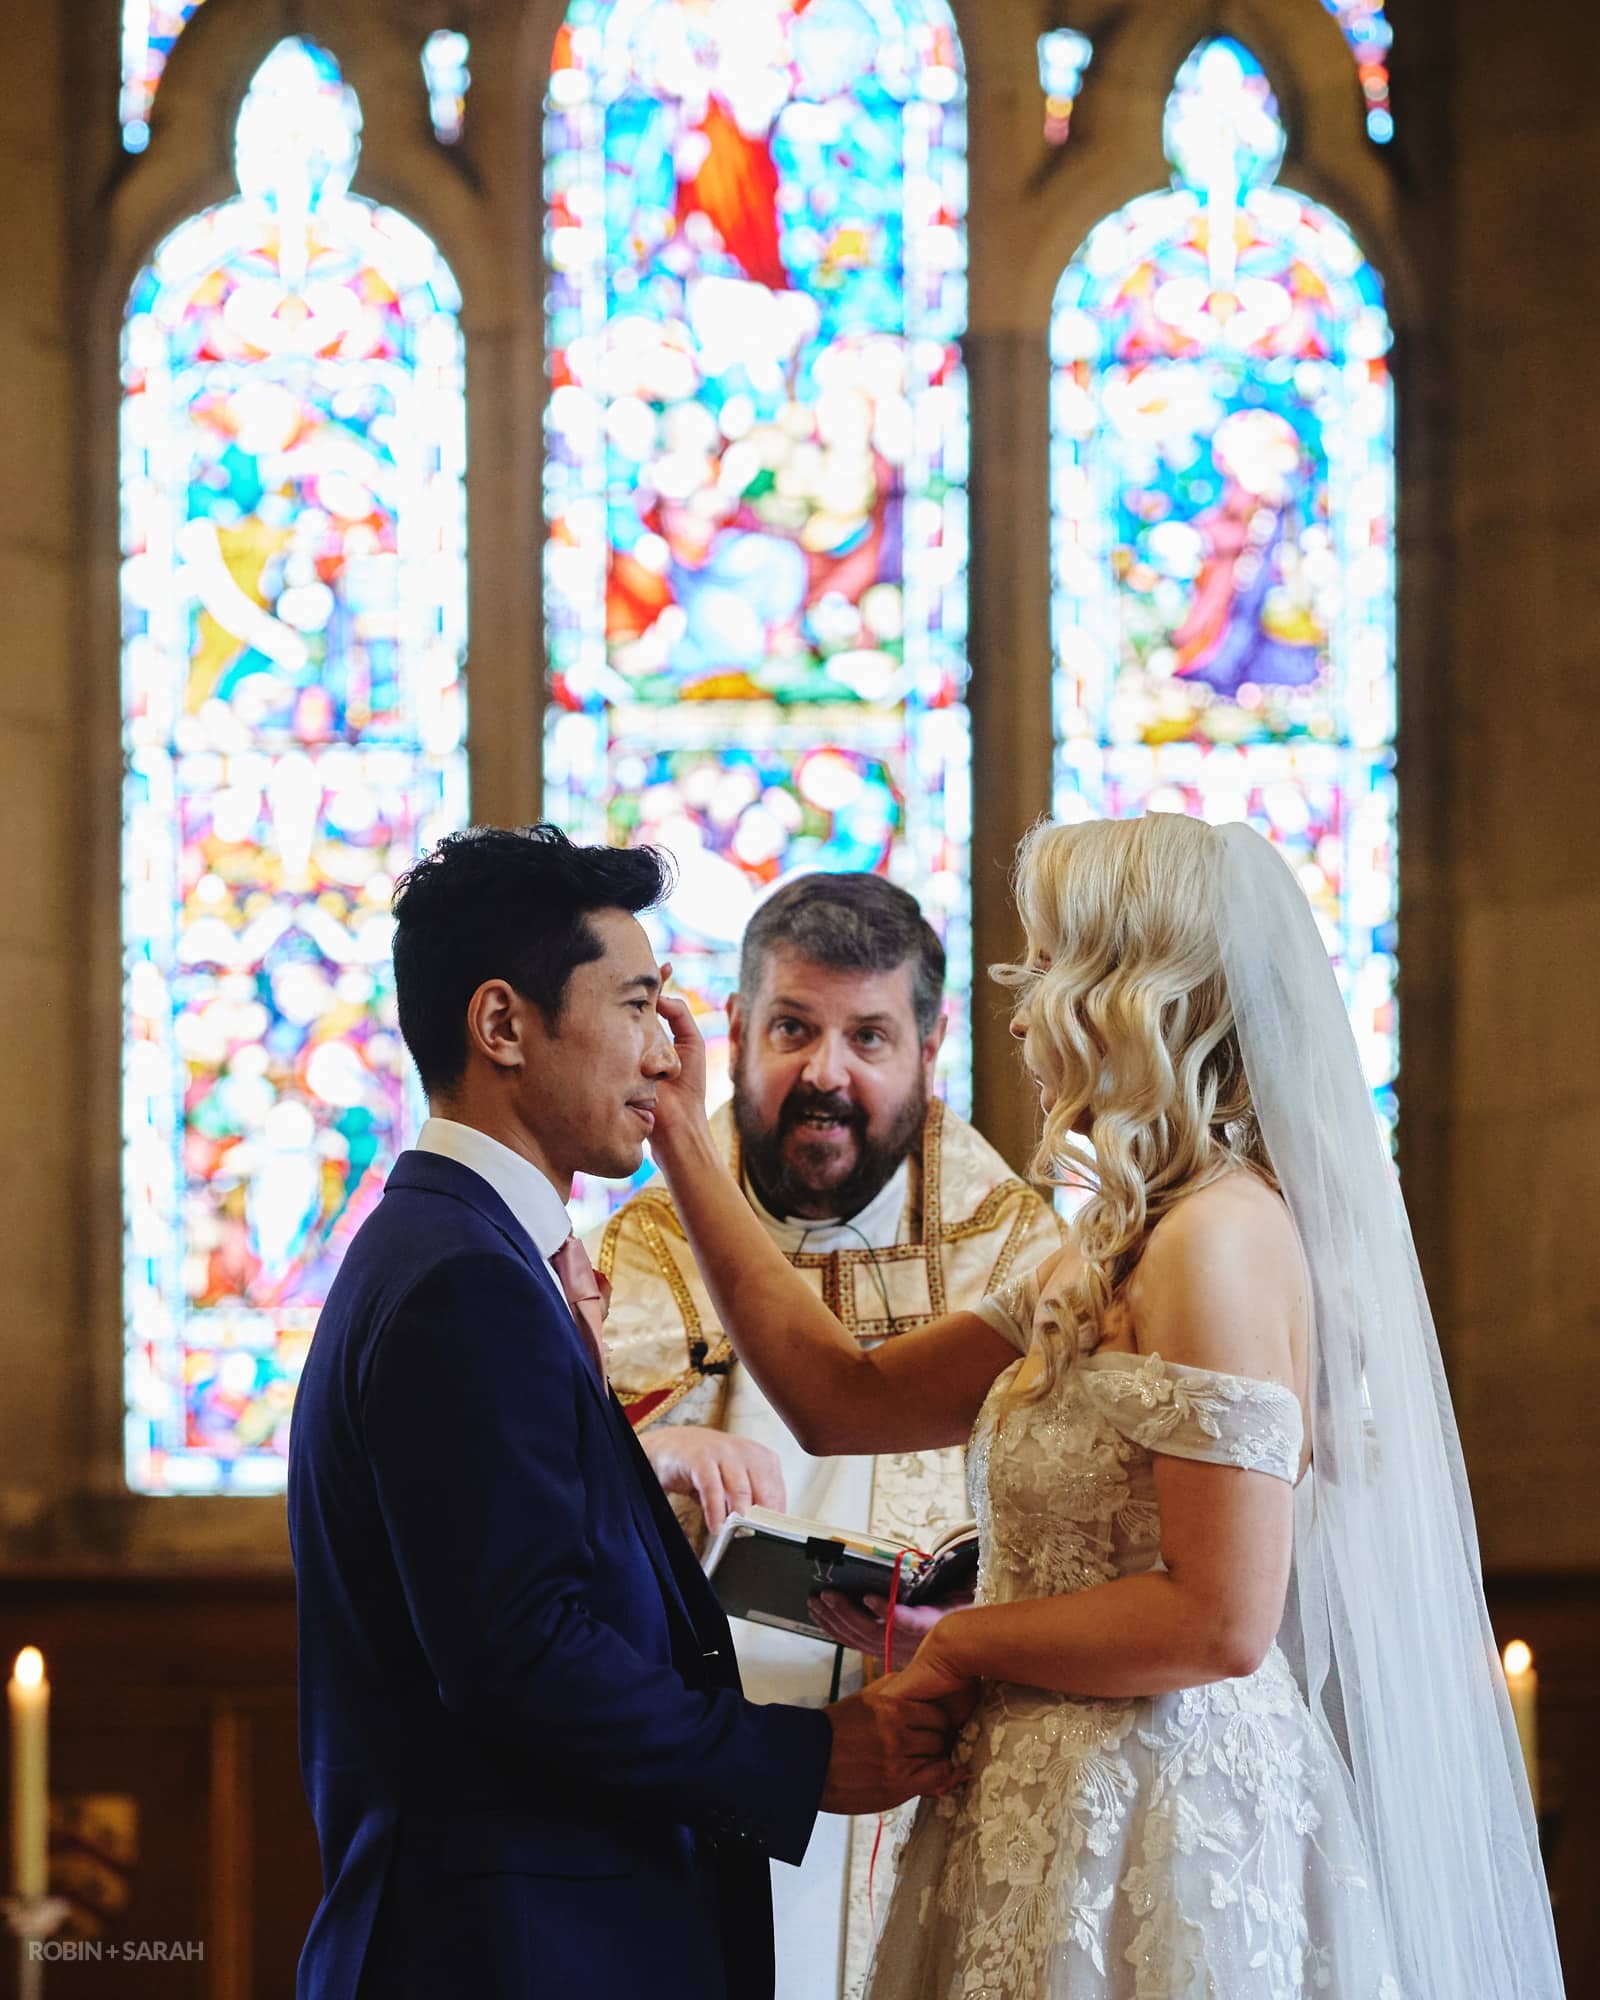 Bride touches groom's head during wedding ceremony at Feckenham Church